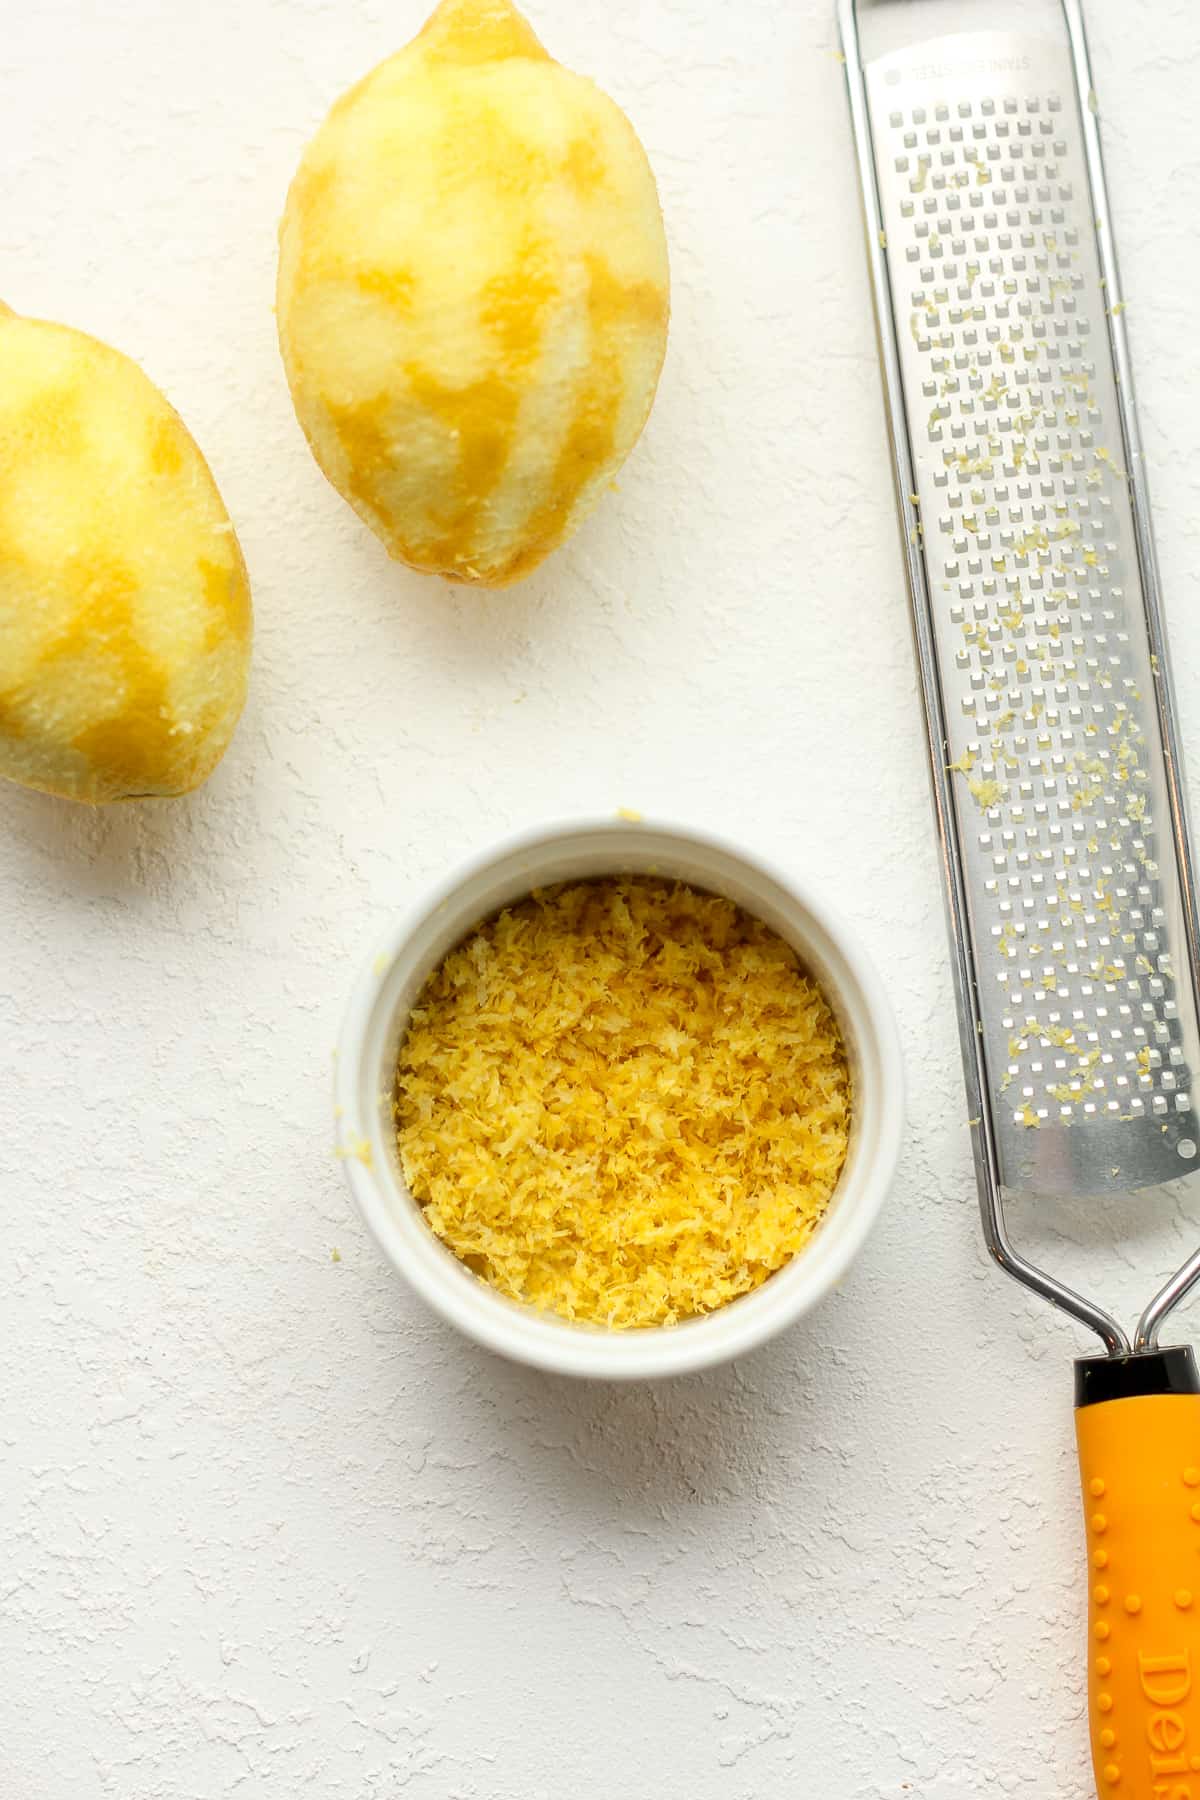 A bowl of lemon zest next to a lemon and a lemon zester.